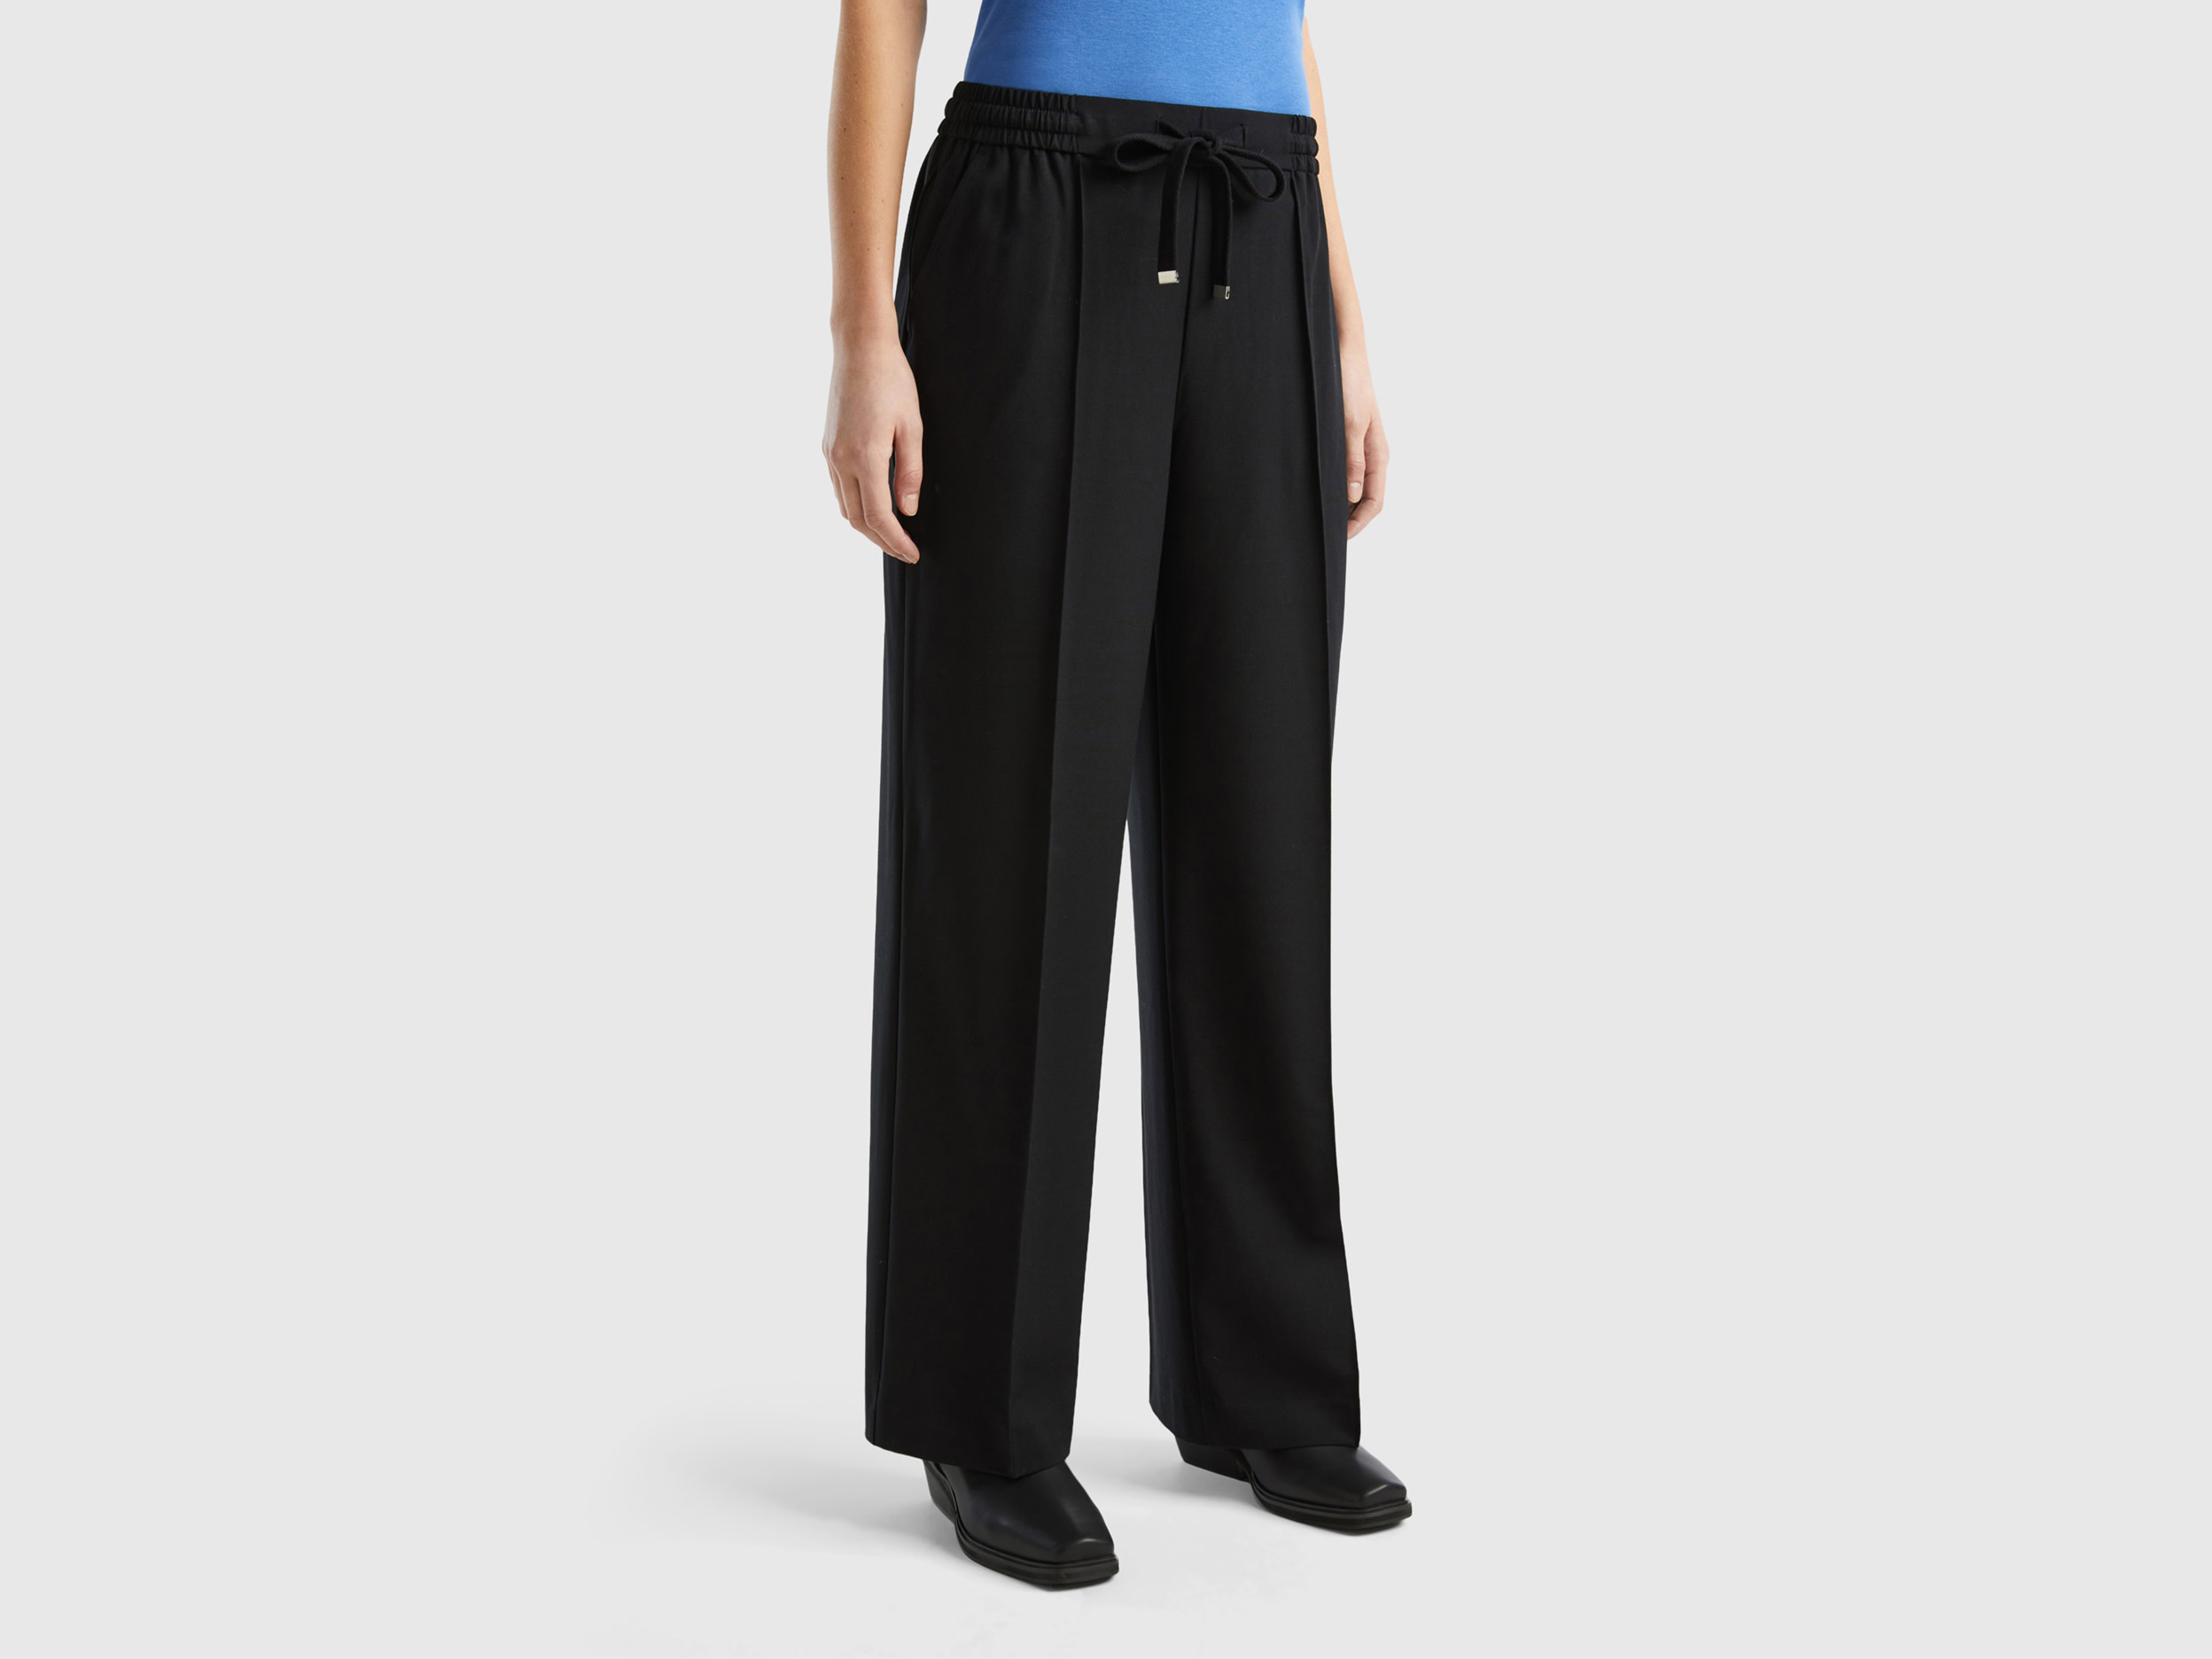 Benetton, Flowy Trousers With Drawstring, size L, Black, Women